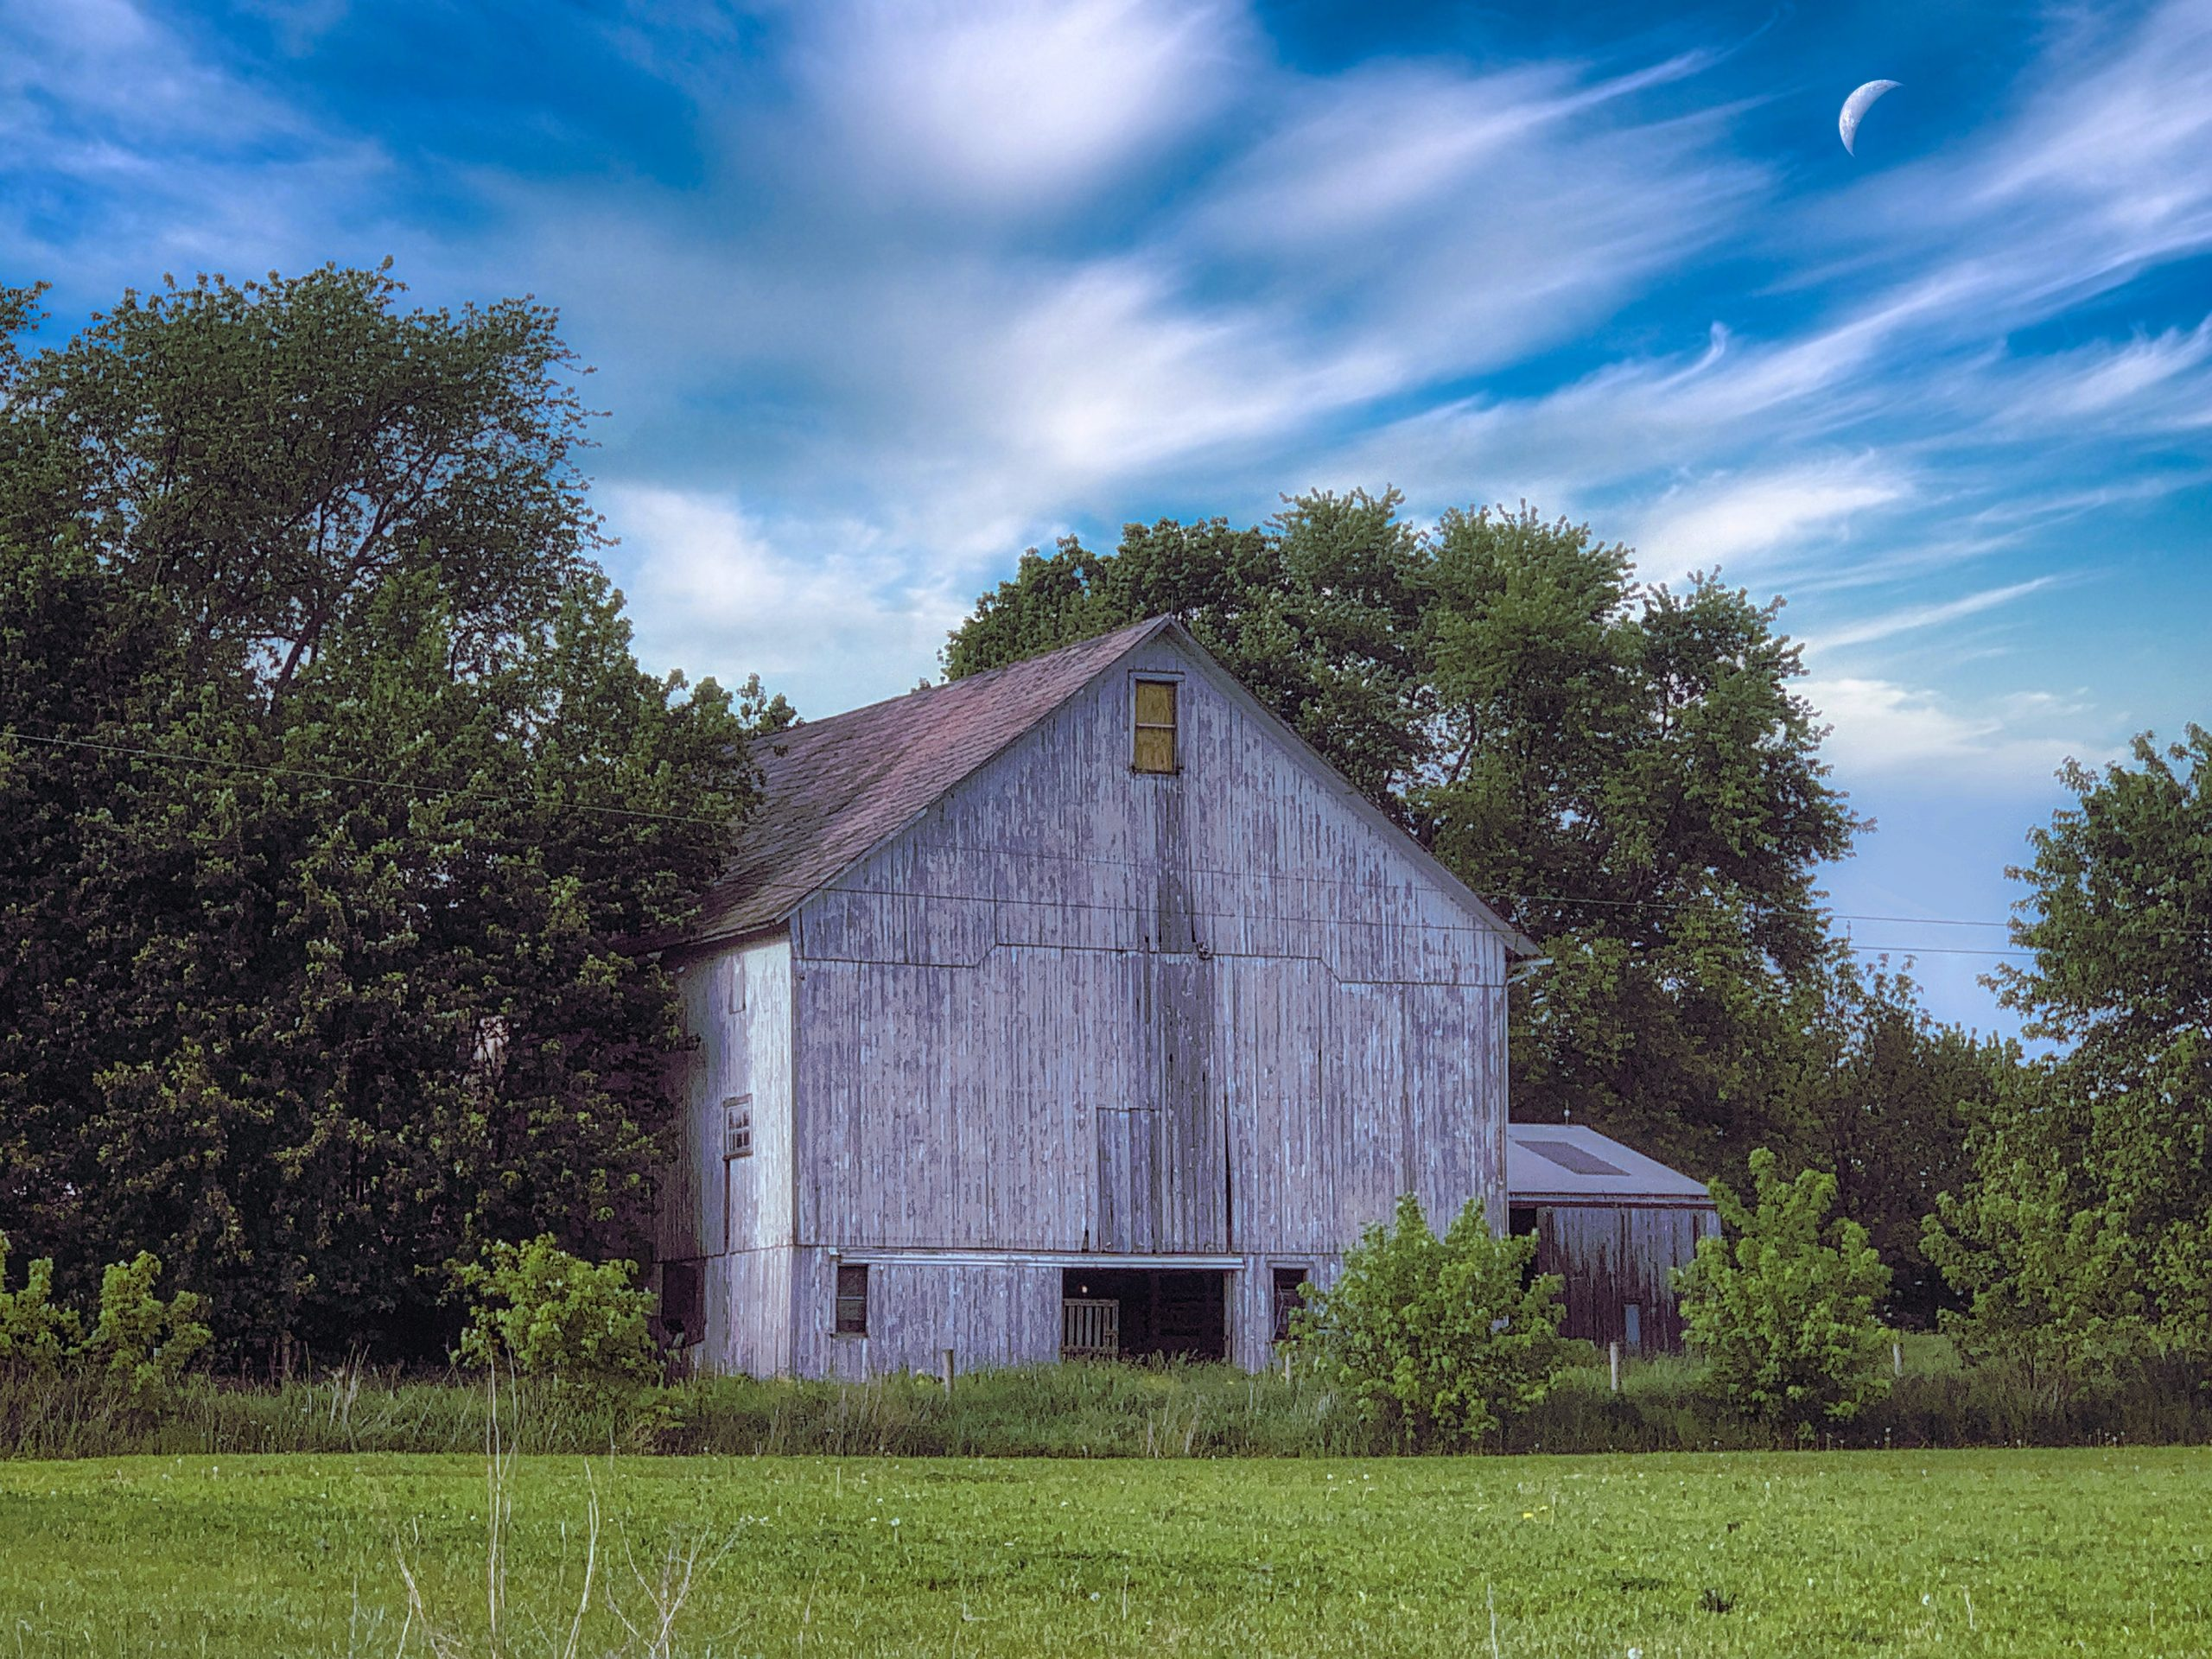 Rural white barn Photo by Leslie Saunders